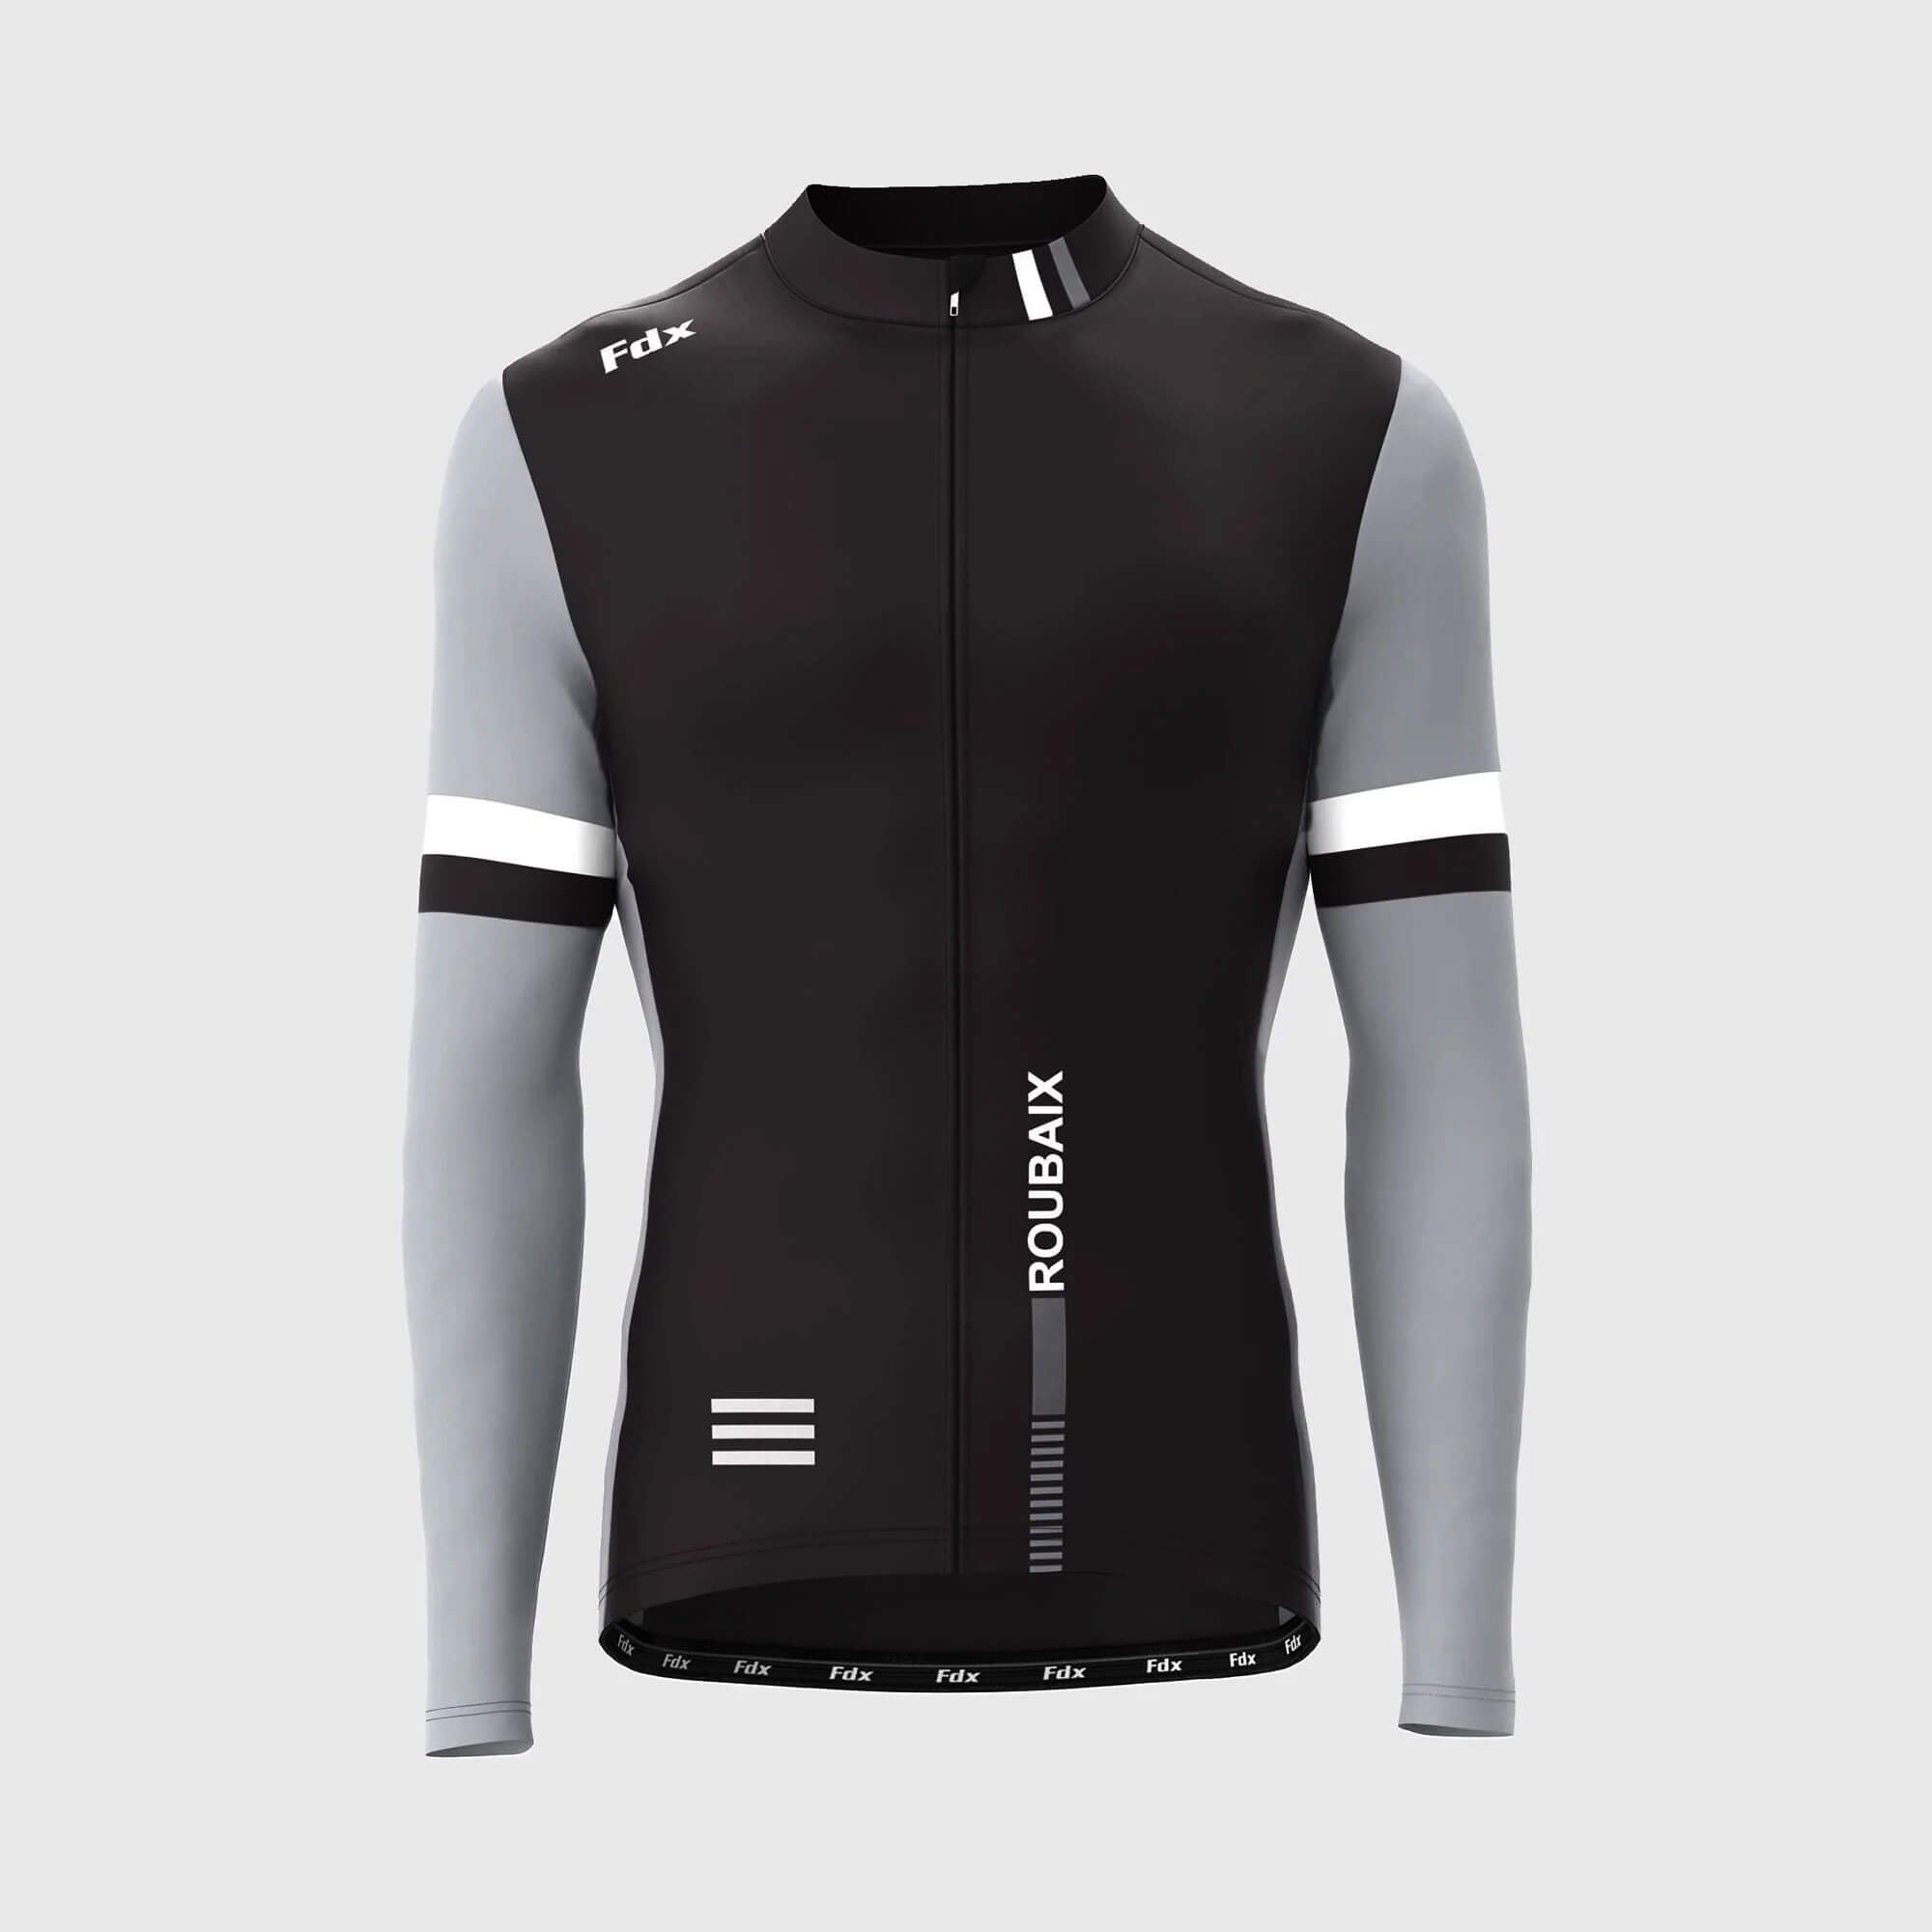 Fdx Mens Black & Grey Long Sleeve Cycling Jersey for Winter Roubaix Thermal Fleece Road Bike Wear Top Full Zipper, Pockets & Hi-viz Reflectors - Limited Edition